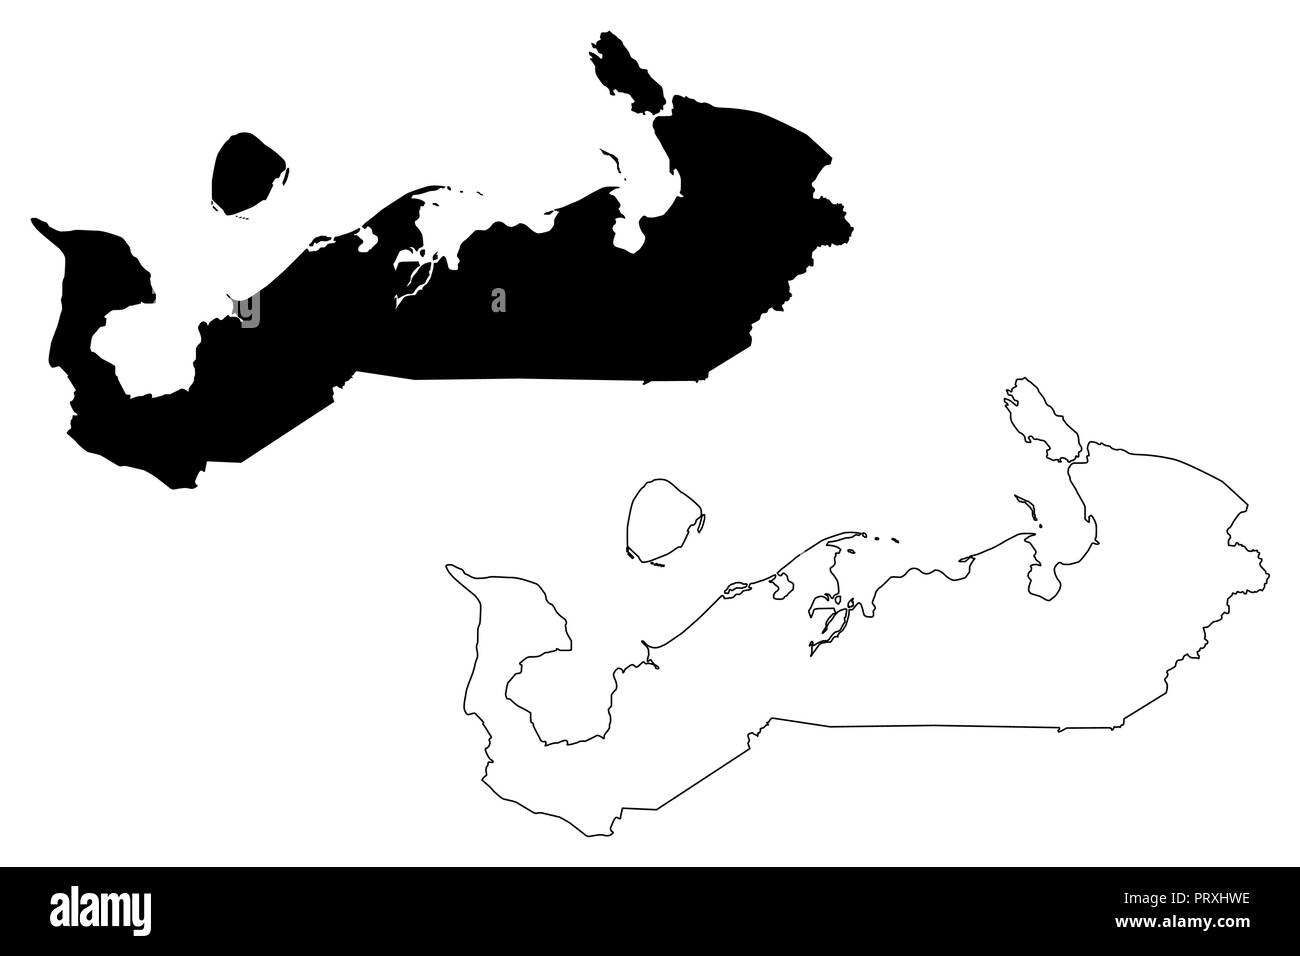 Sakhalin (Russland, Subjekte der Russischen Föderation, autonomen Okrug) Karte Vektor-illustration, kritzeln Skizze Stadt Bukarest Okr Stock Vektor